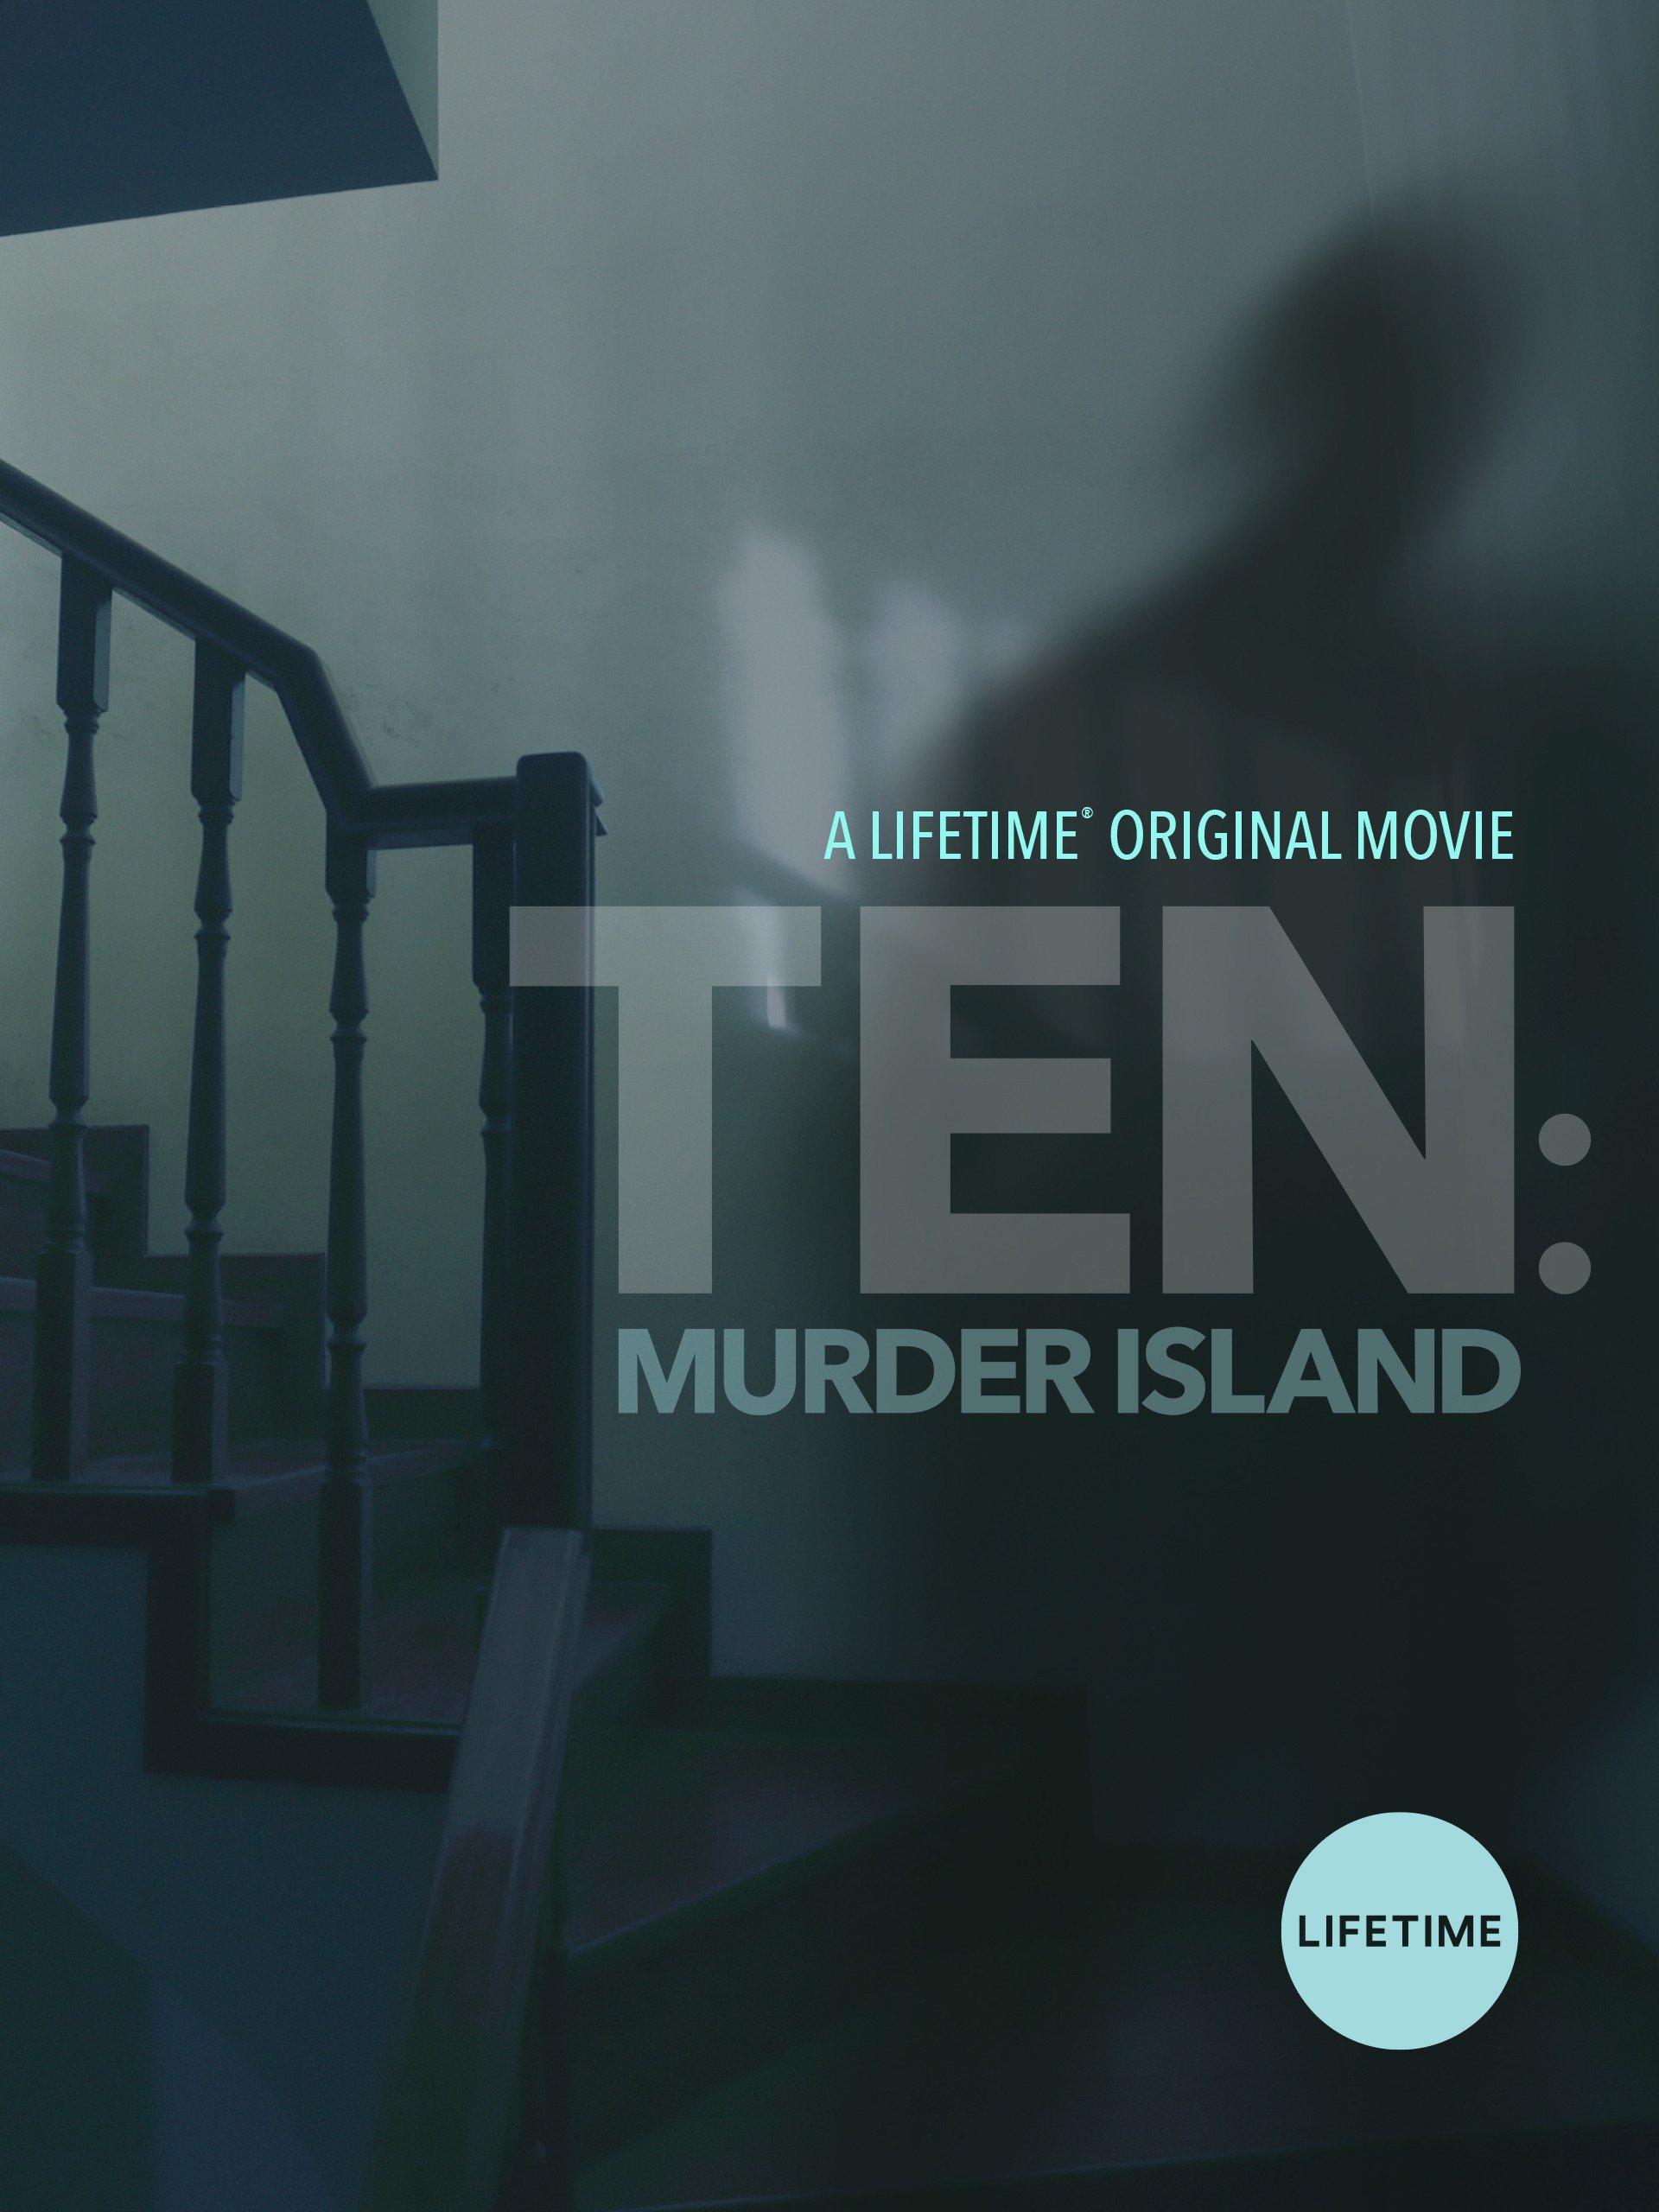 Ten: Murder Island (2017)